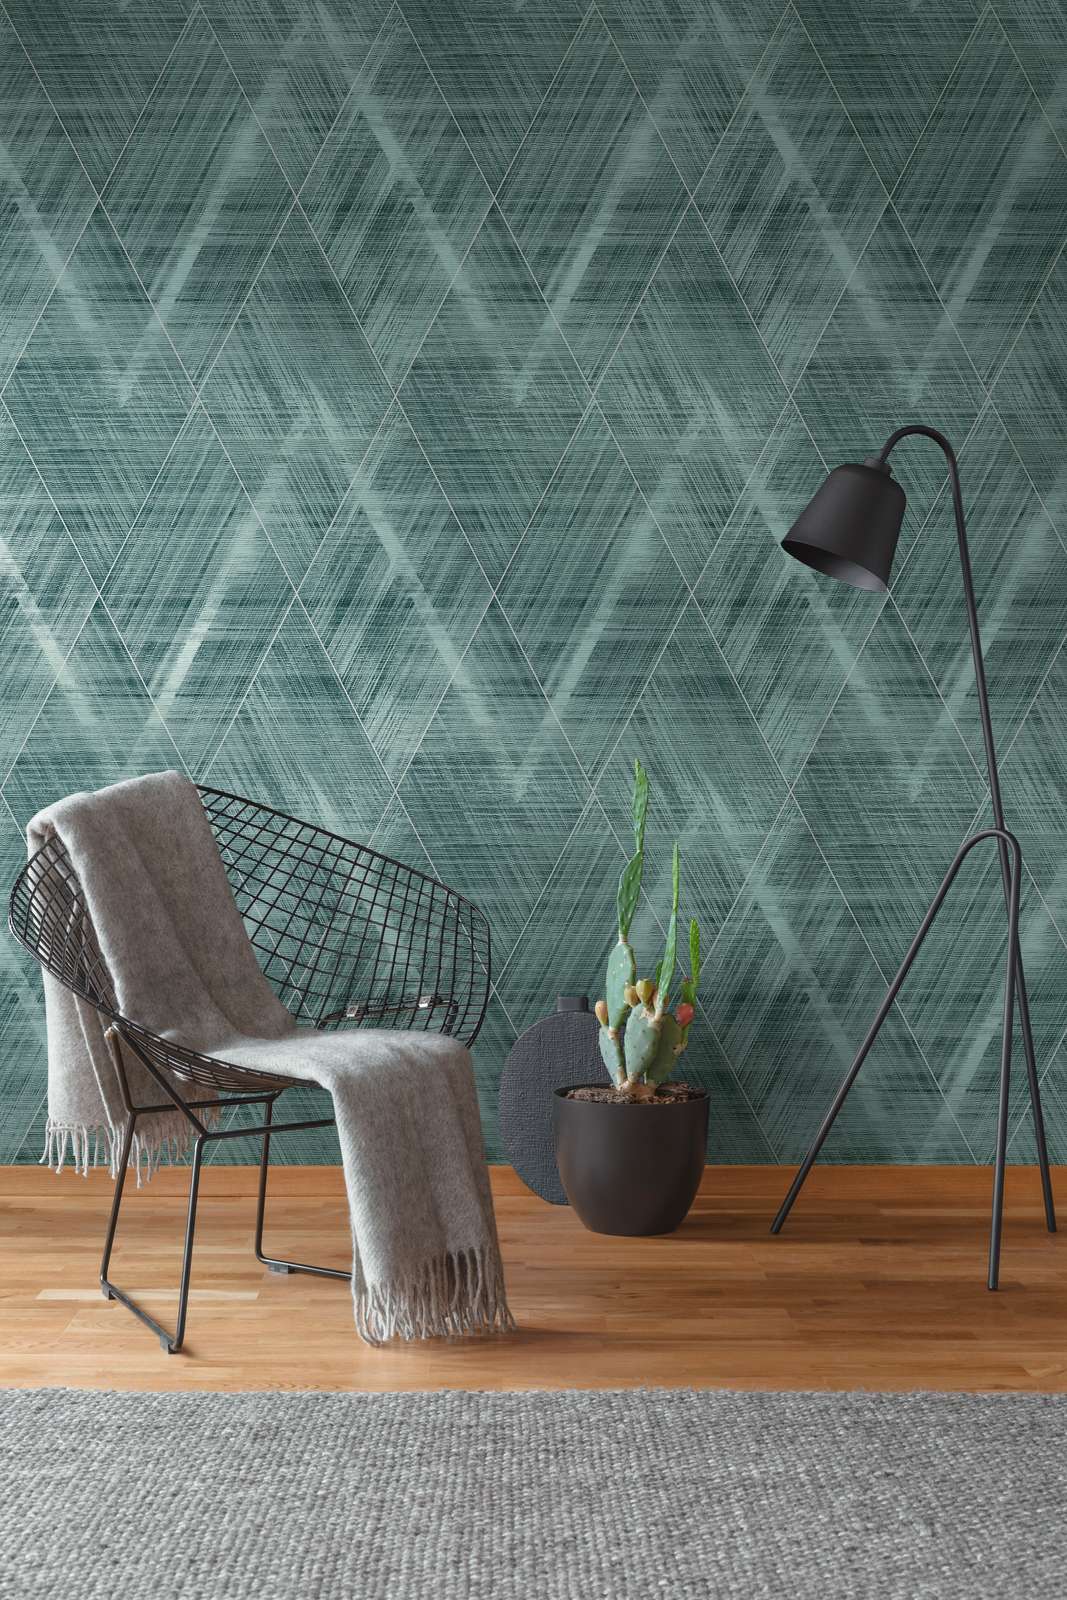             Lozenge wallpaper with mottled textile look - metallic, green
        